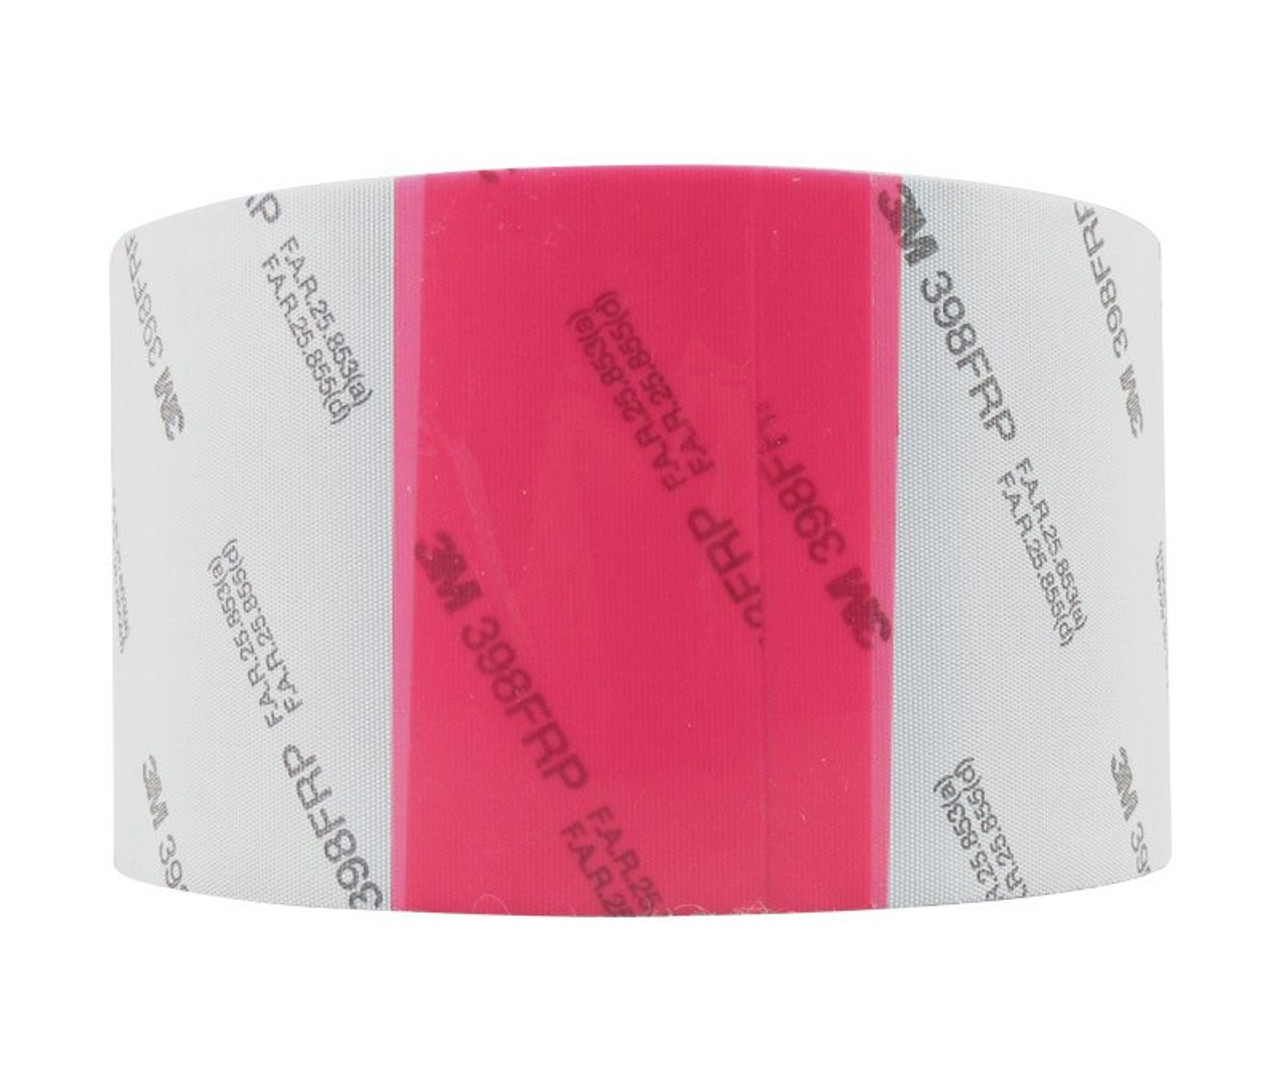 Fabric adhesive tape - RAYON CLOTH - Distribuciones Julmarsa S.L.